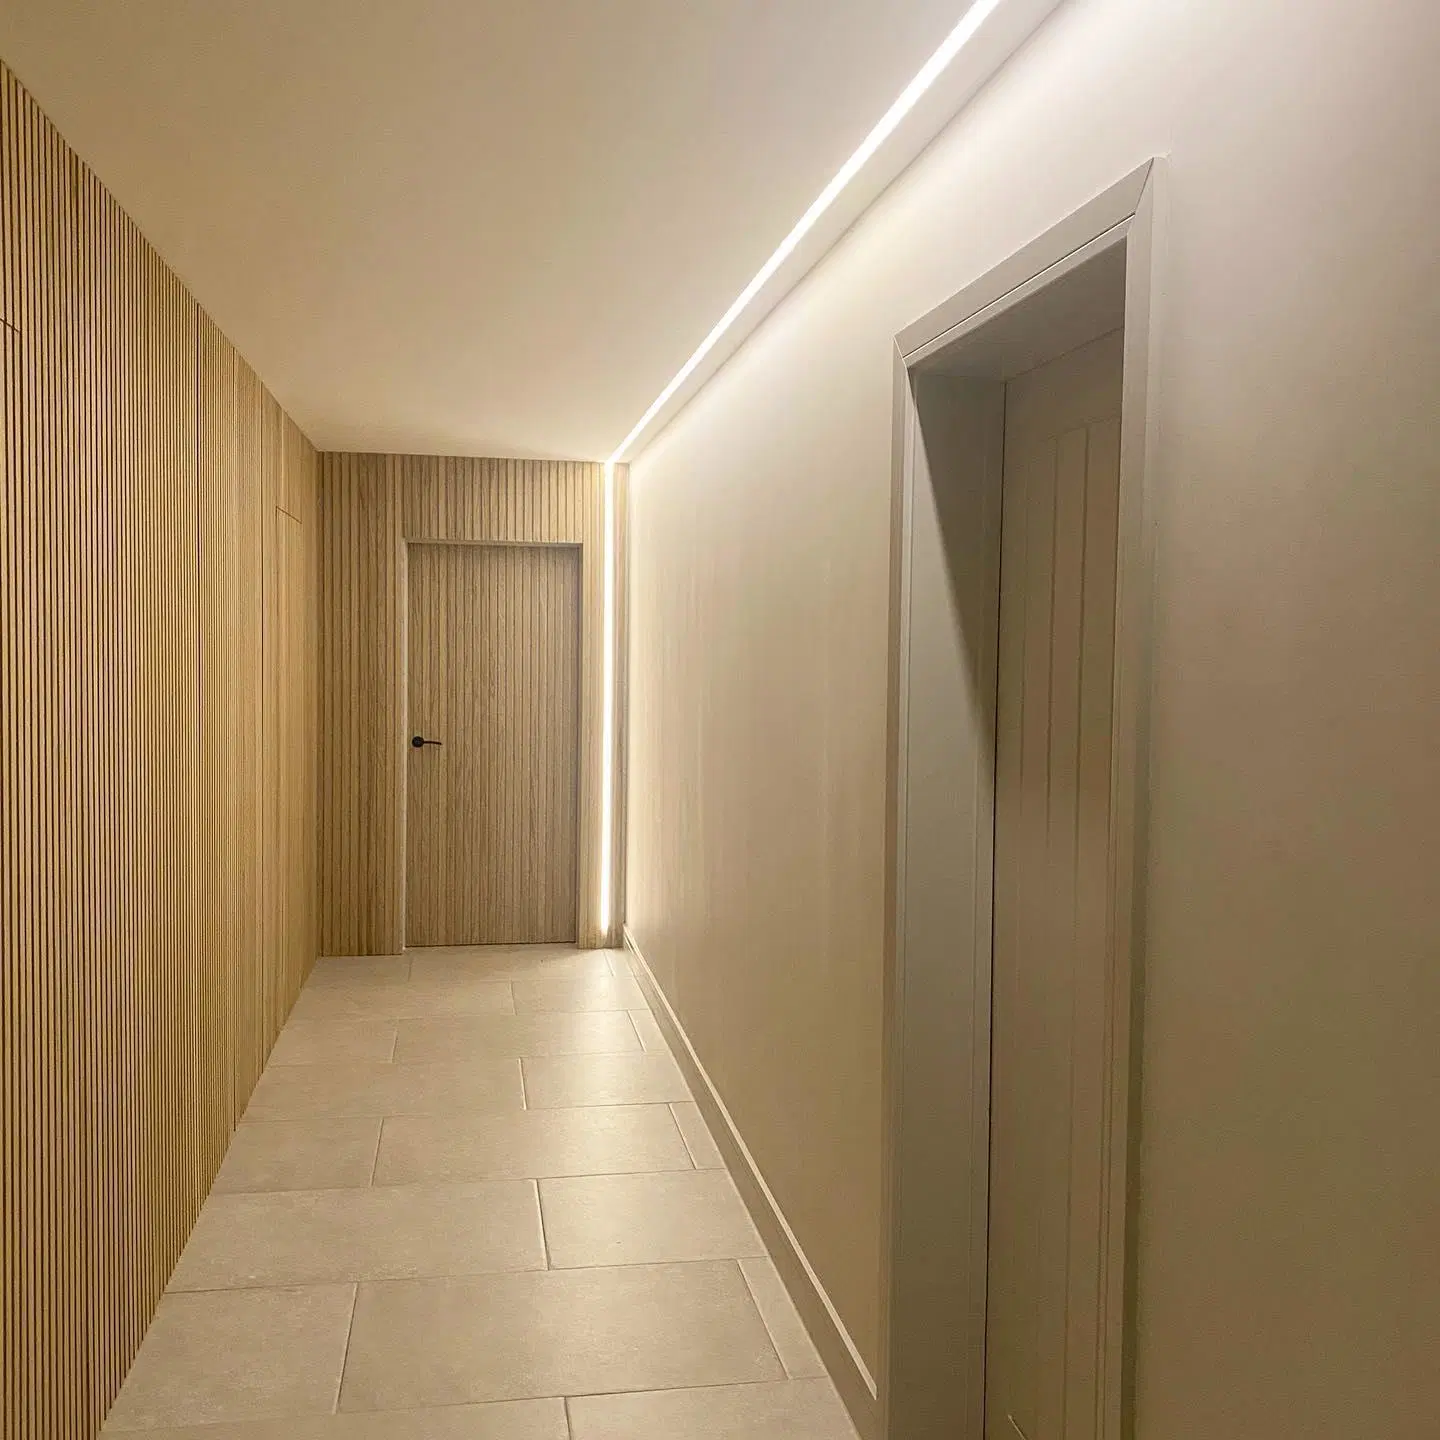 3D Slat Wood Wall Panels Acoustic Panels for Interior Wall Decor